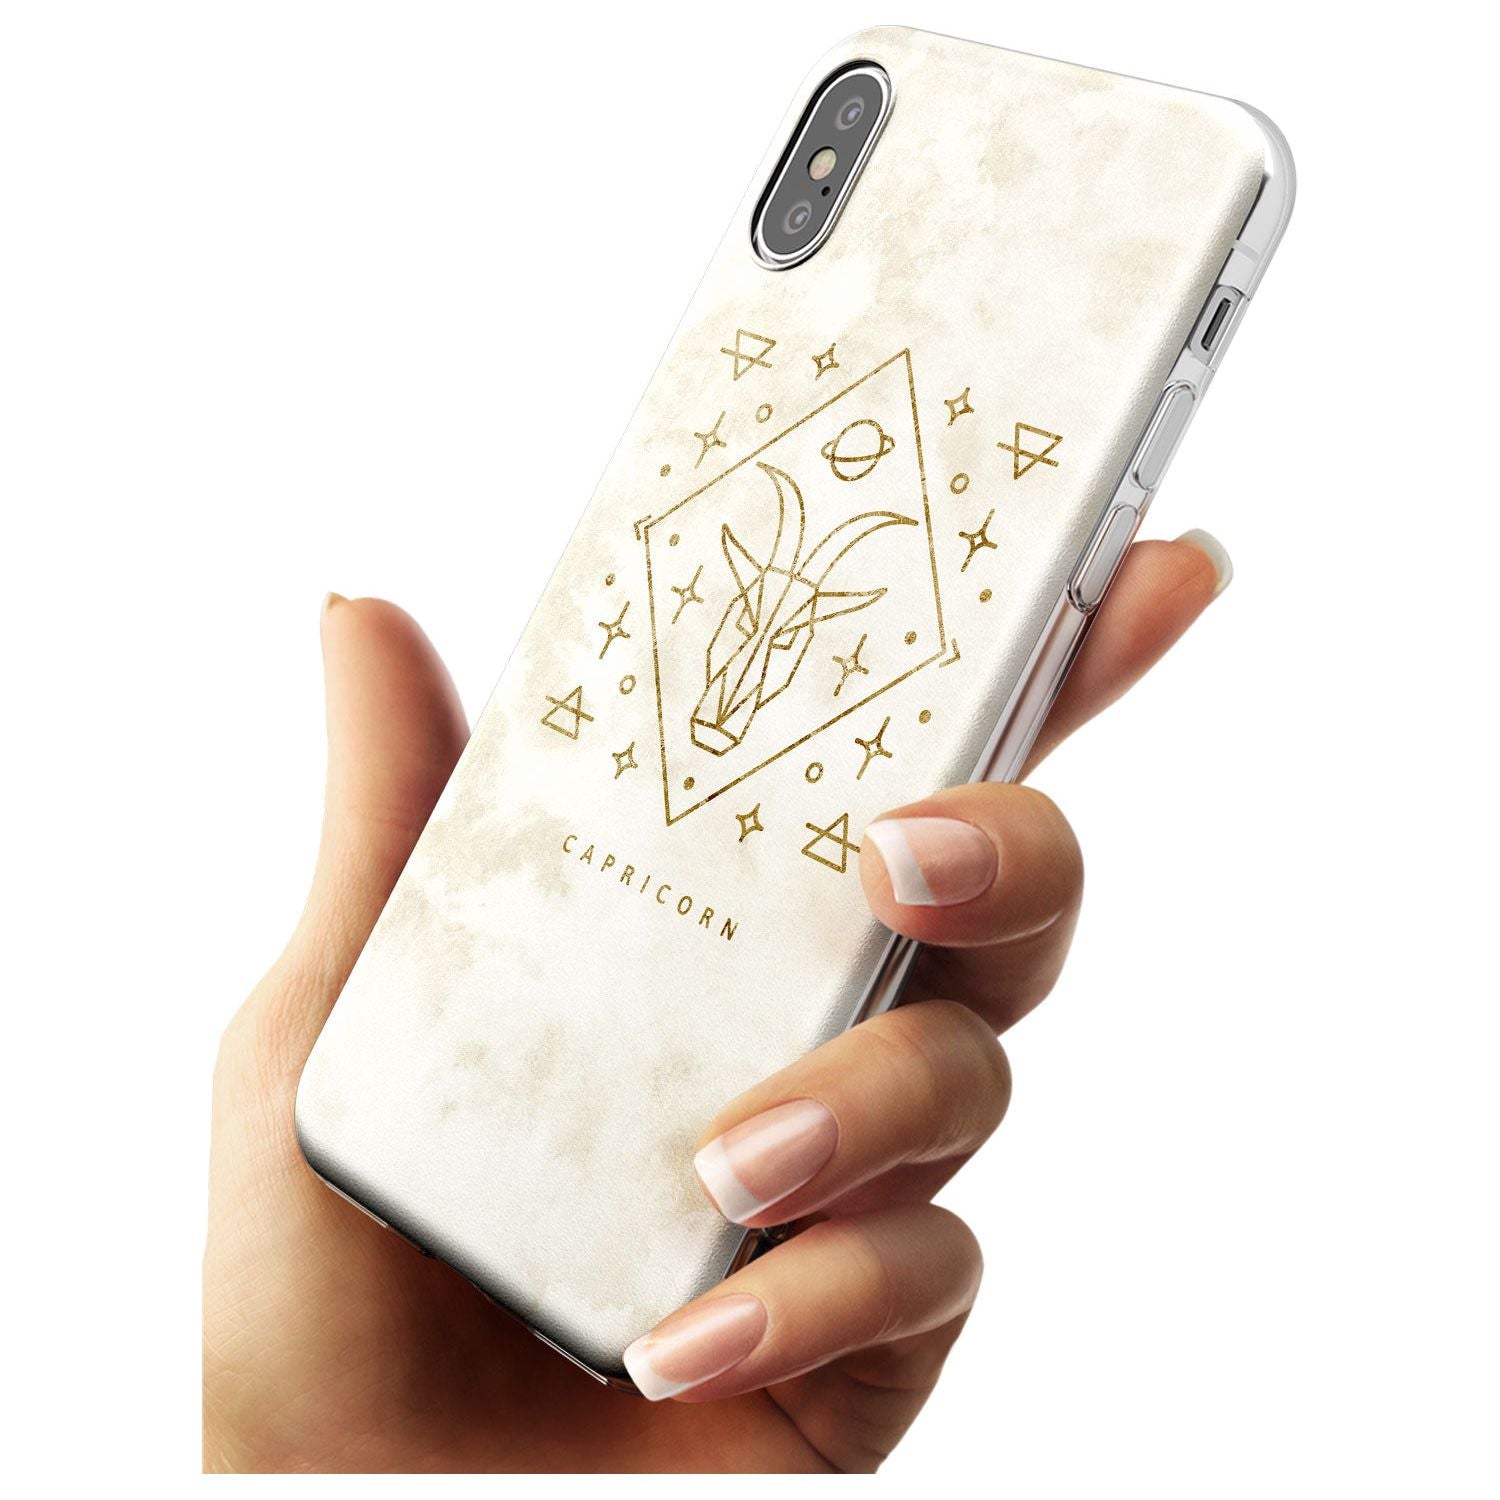 Capricorn Emblem - Solid Gold Marbled Design Slim TPU Phone Case Warehouse X XS Max XR